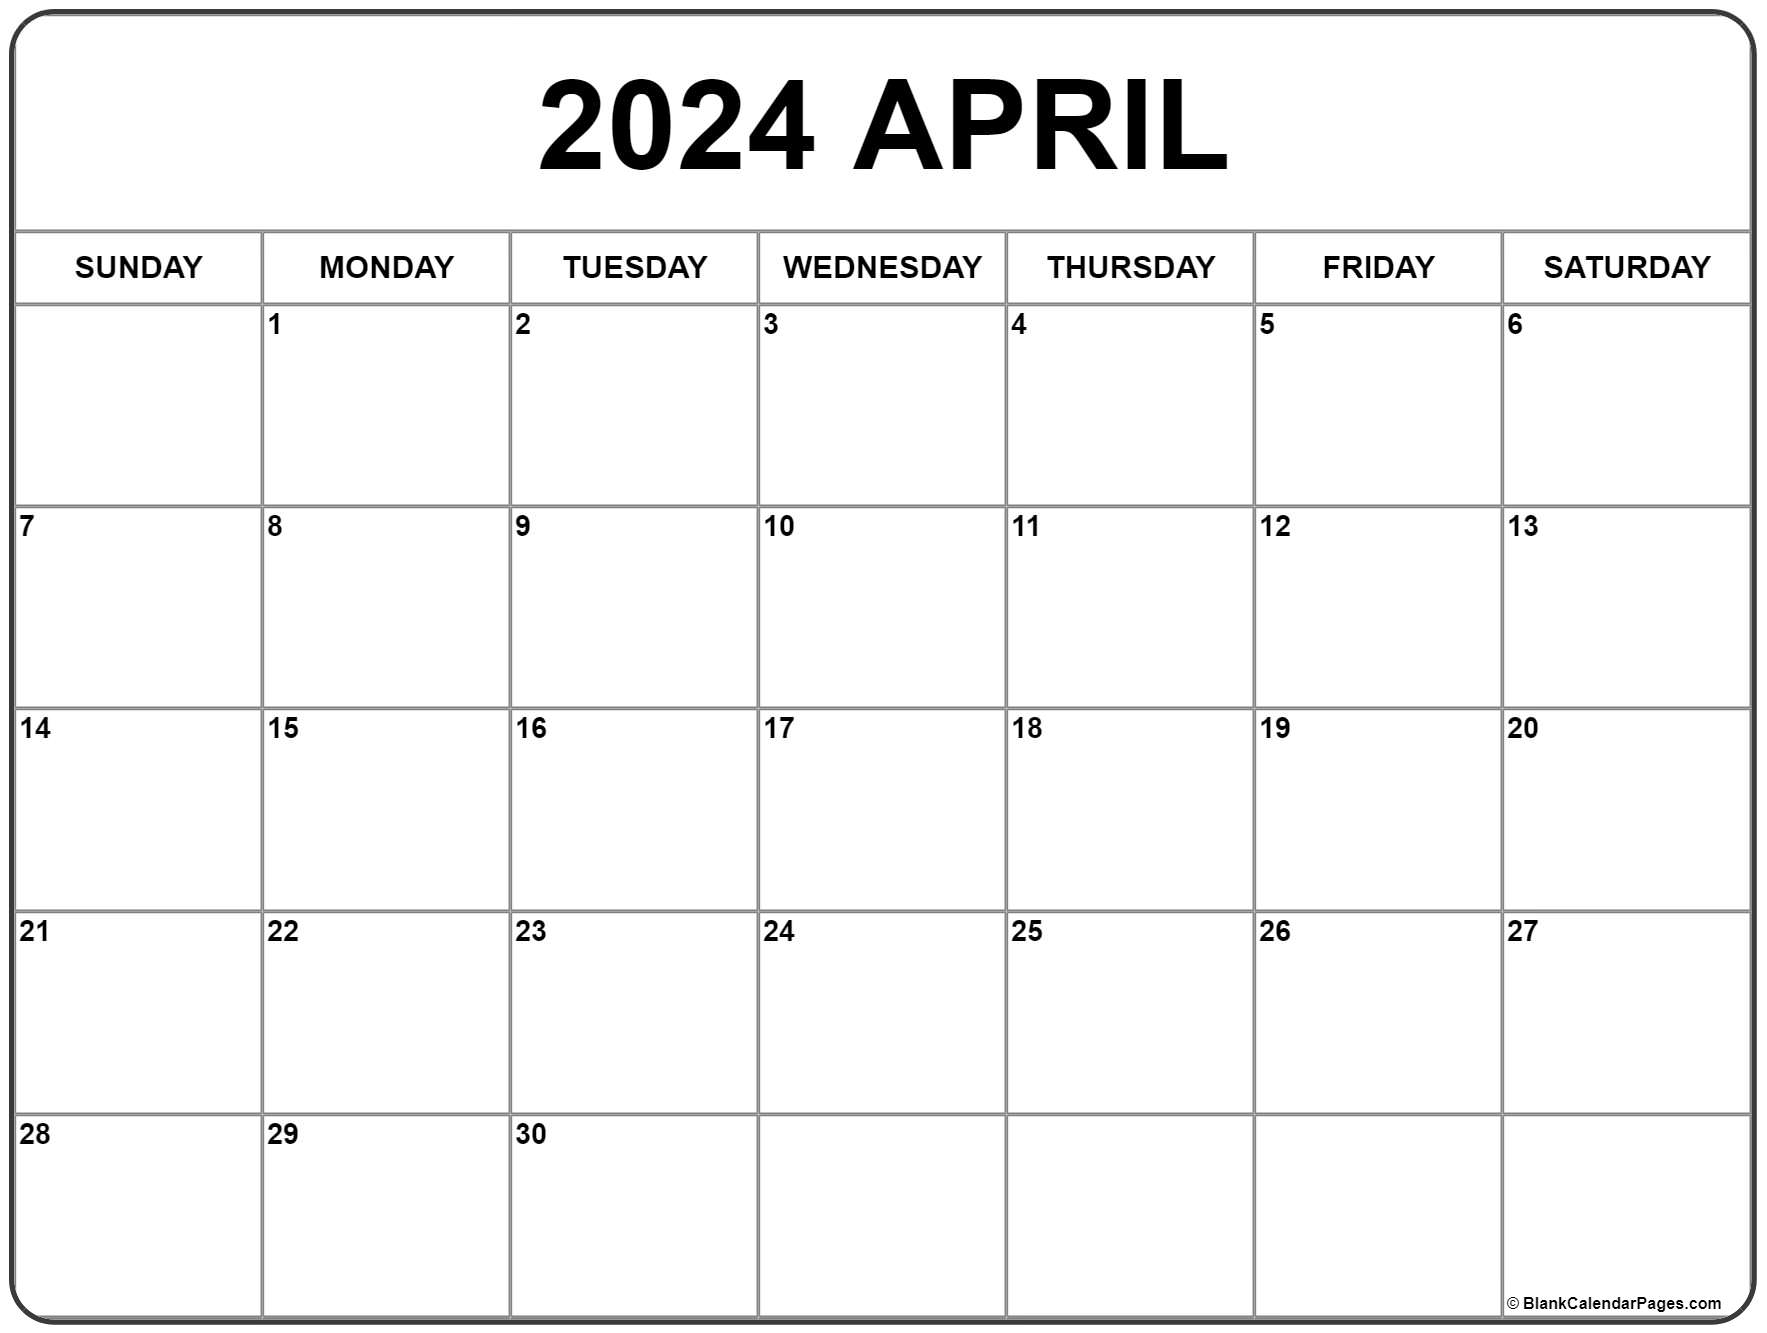 Aprol 2024 Calendar Candi Corissa